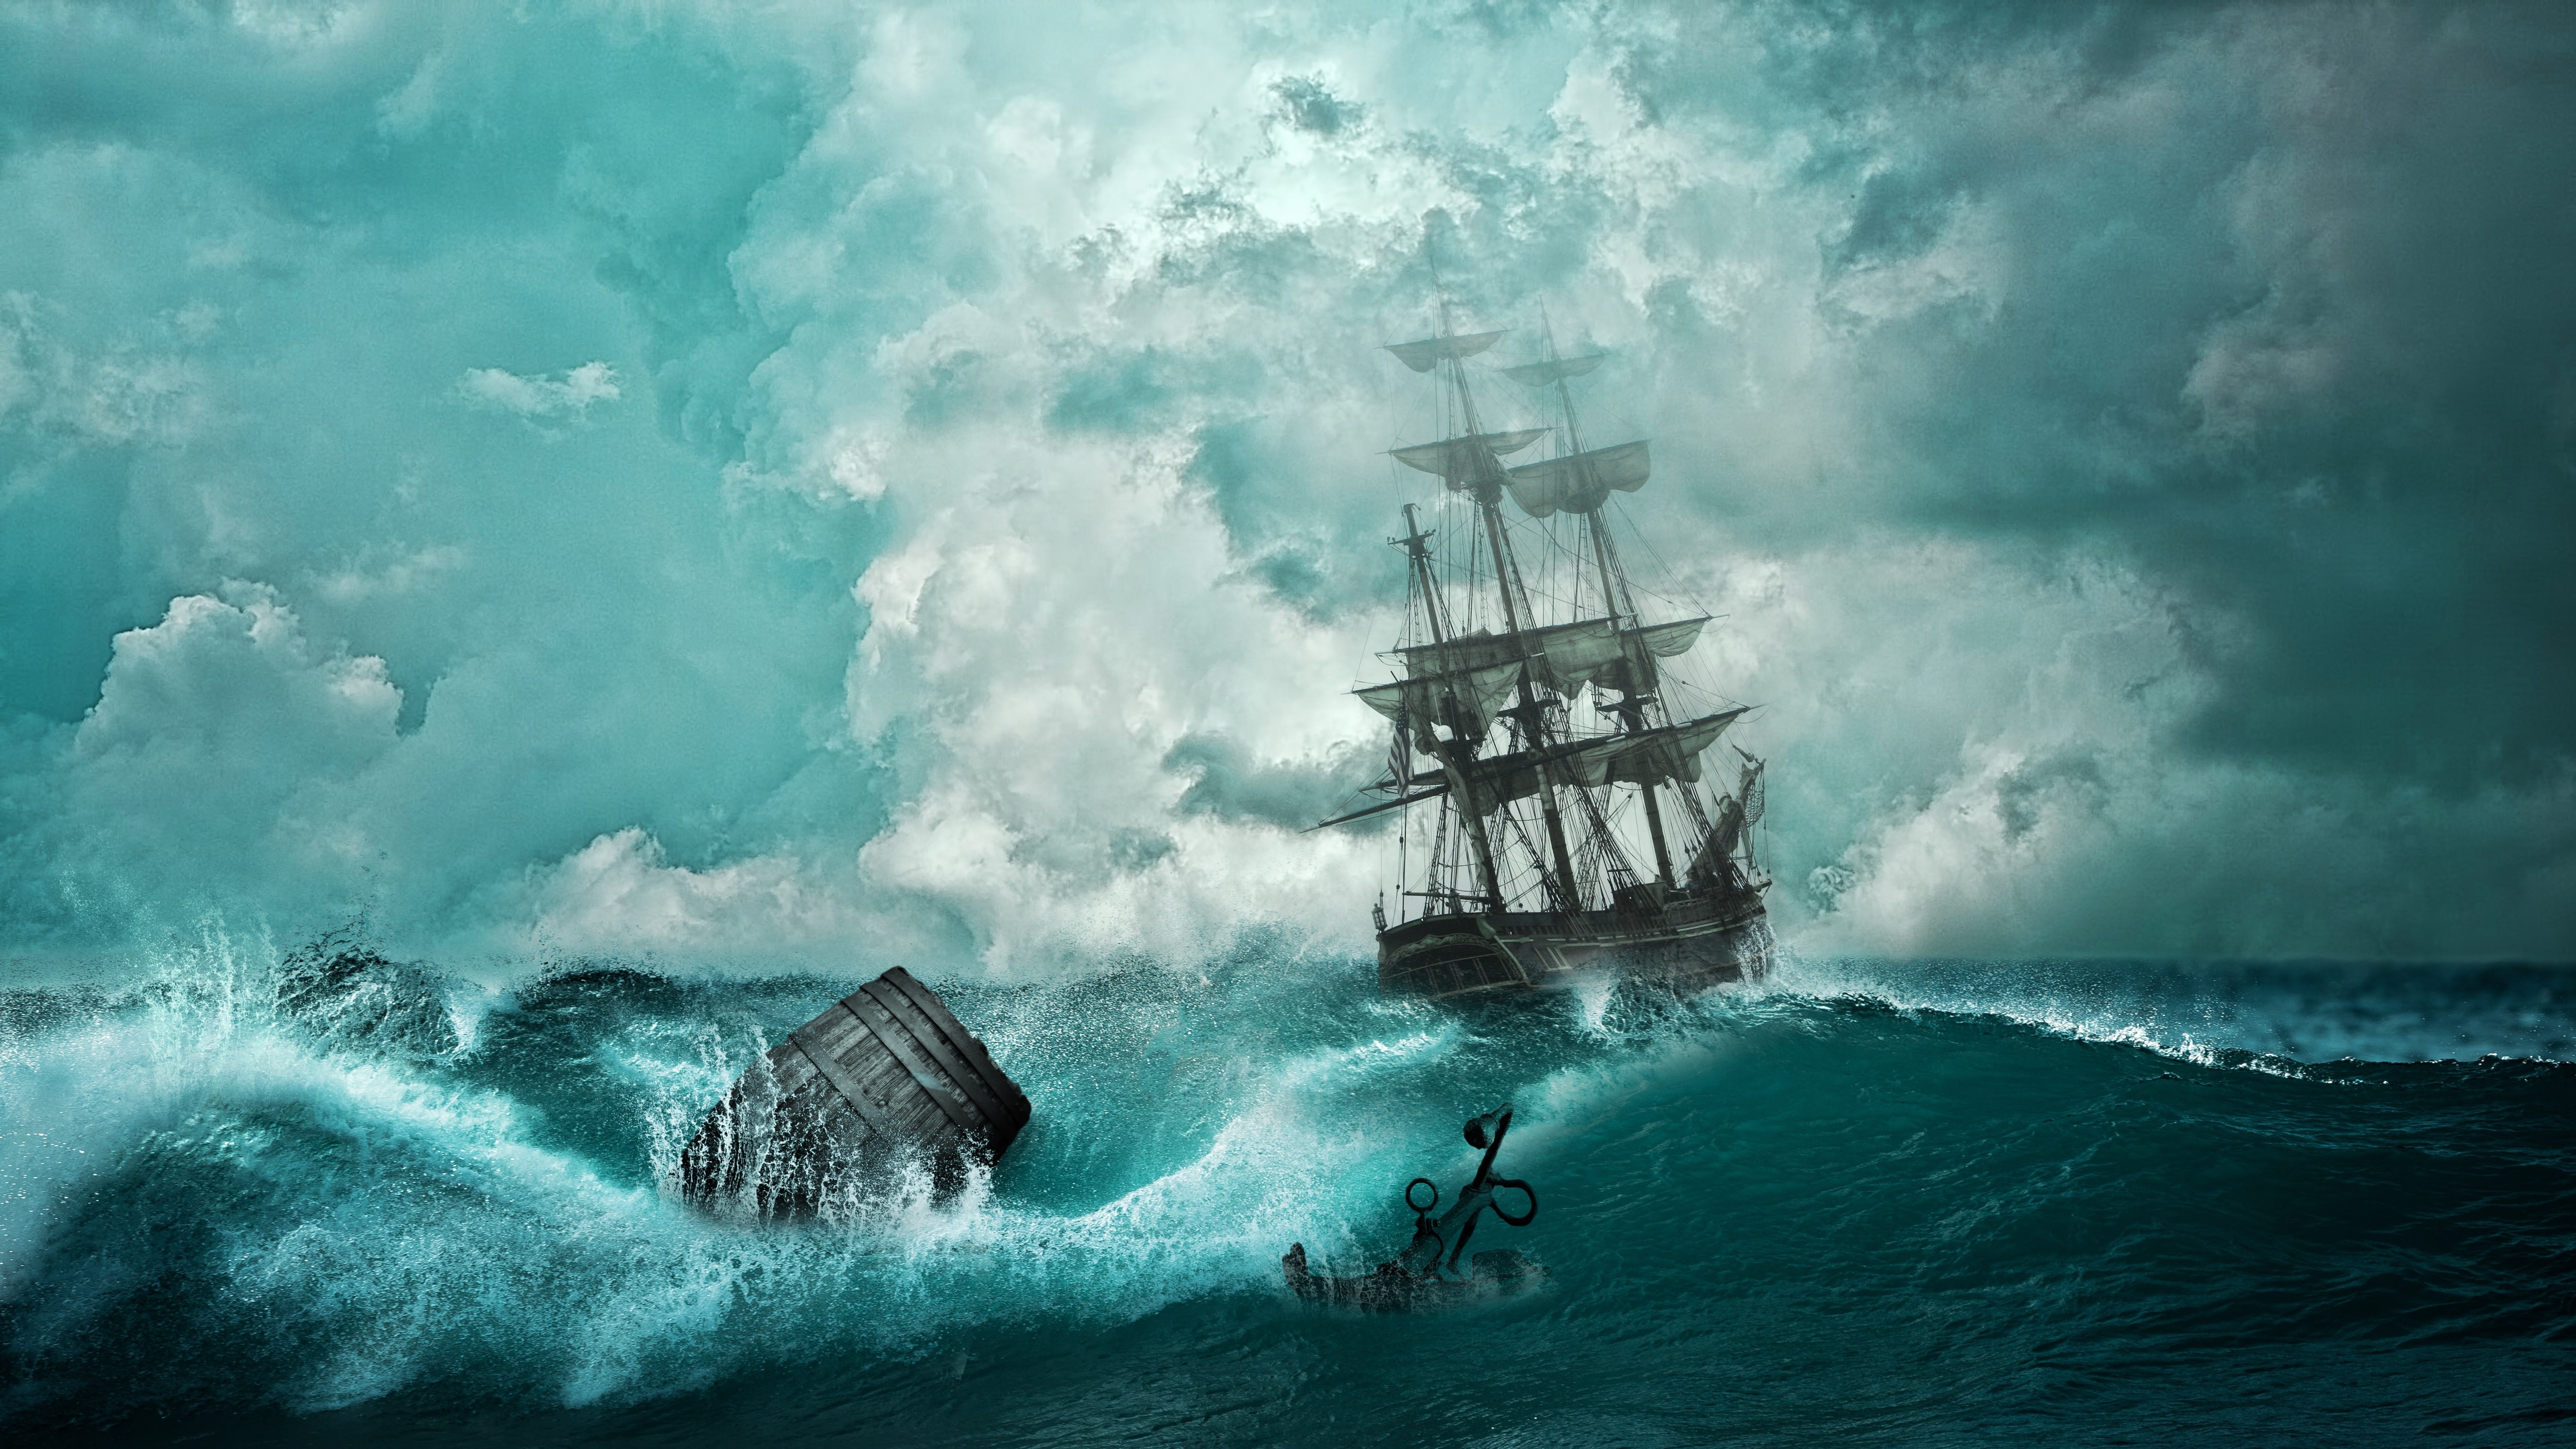 Ship Shipwreck Adventure Wallpaper and Free